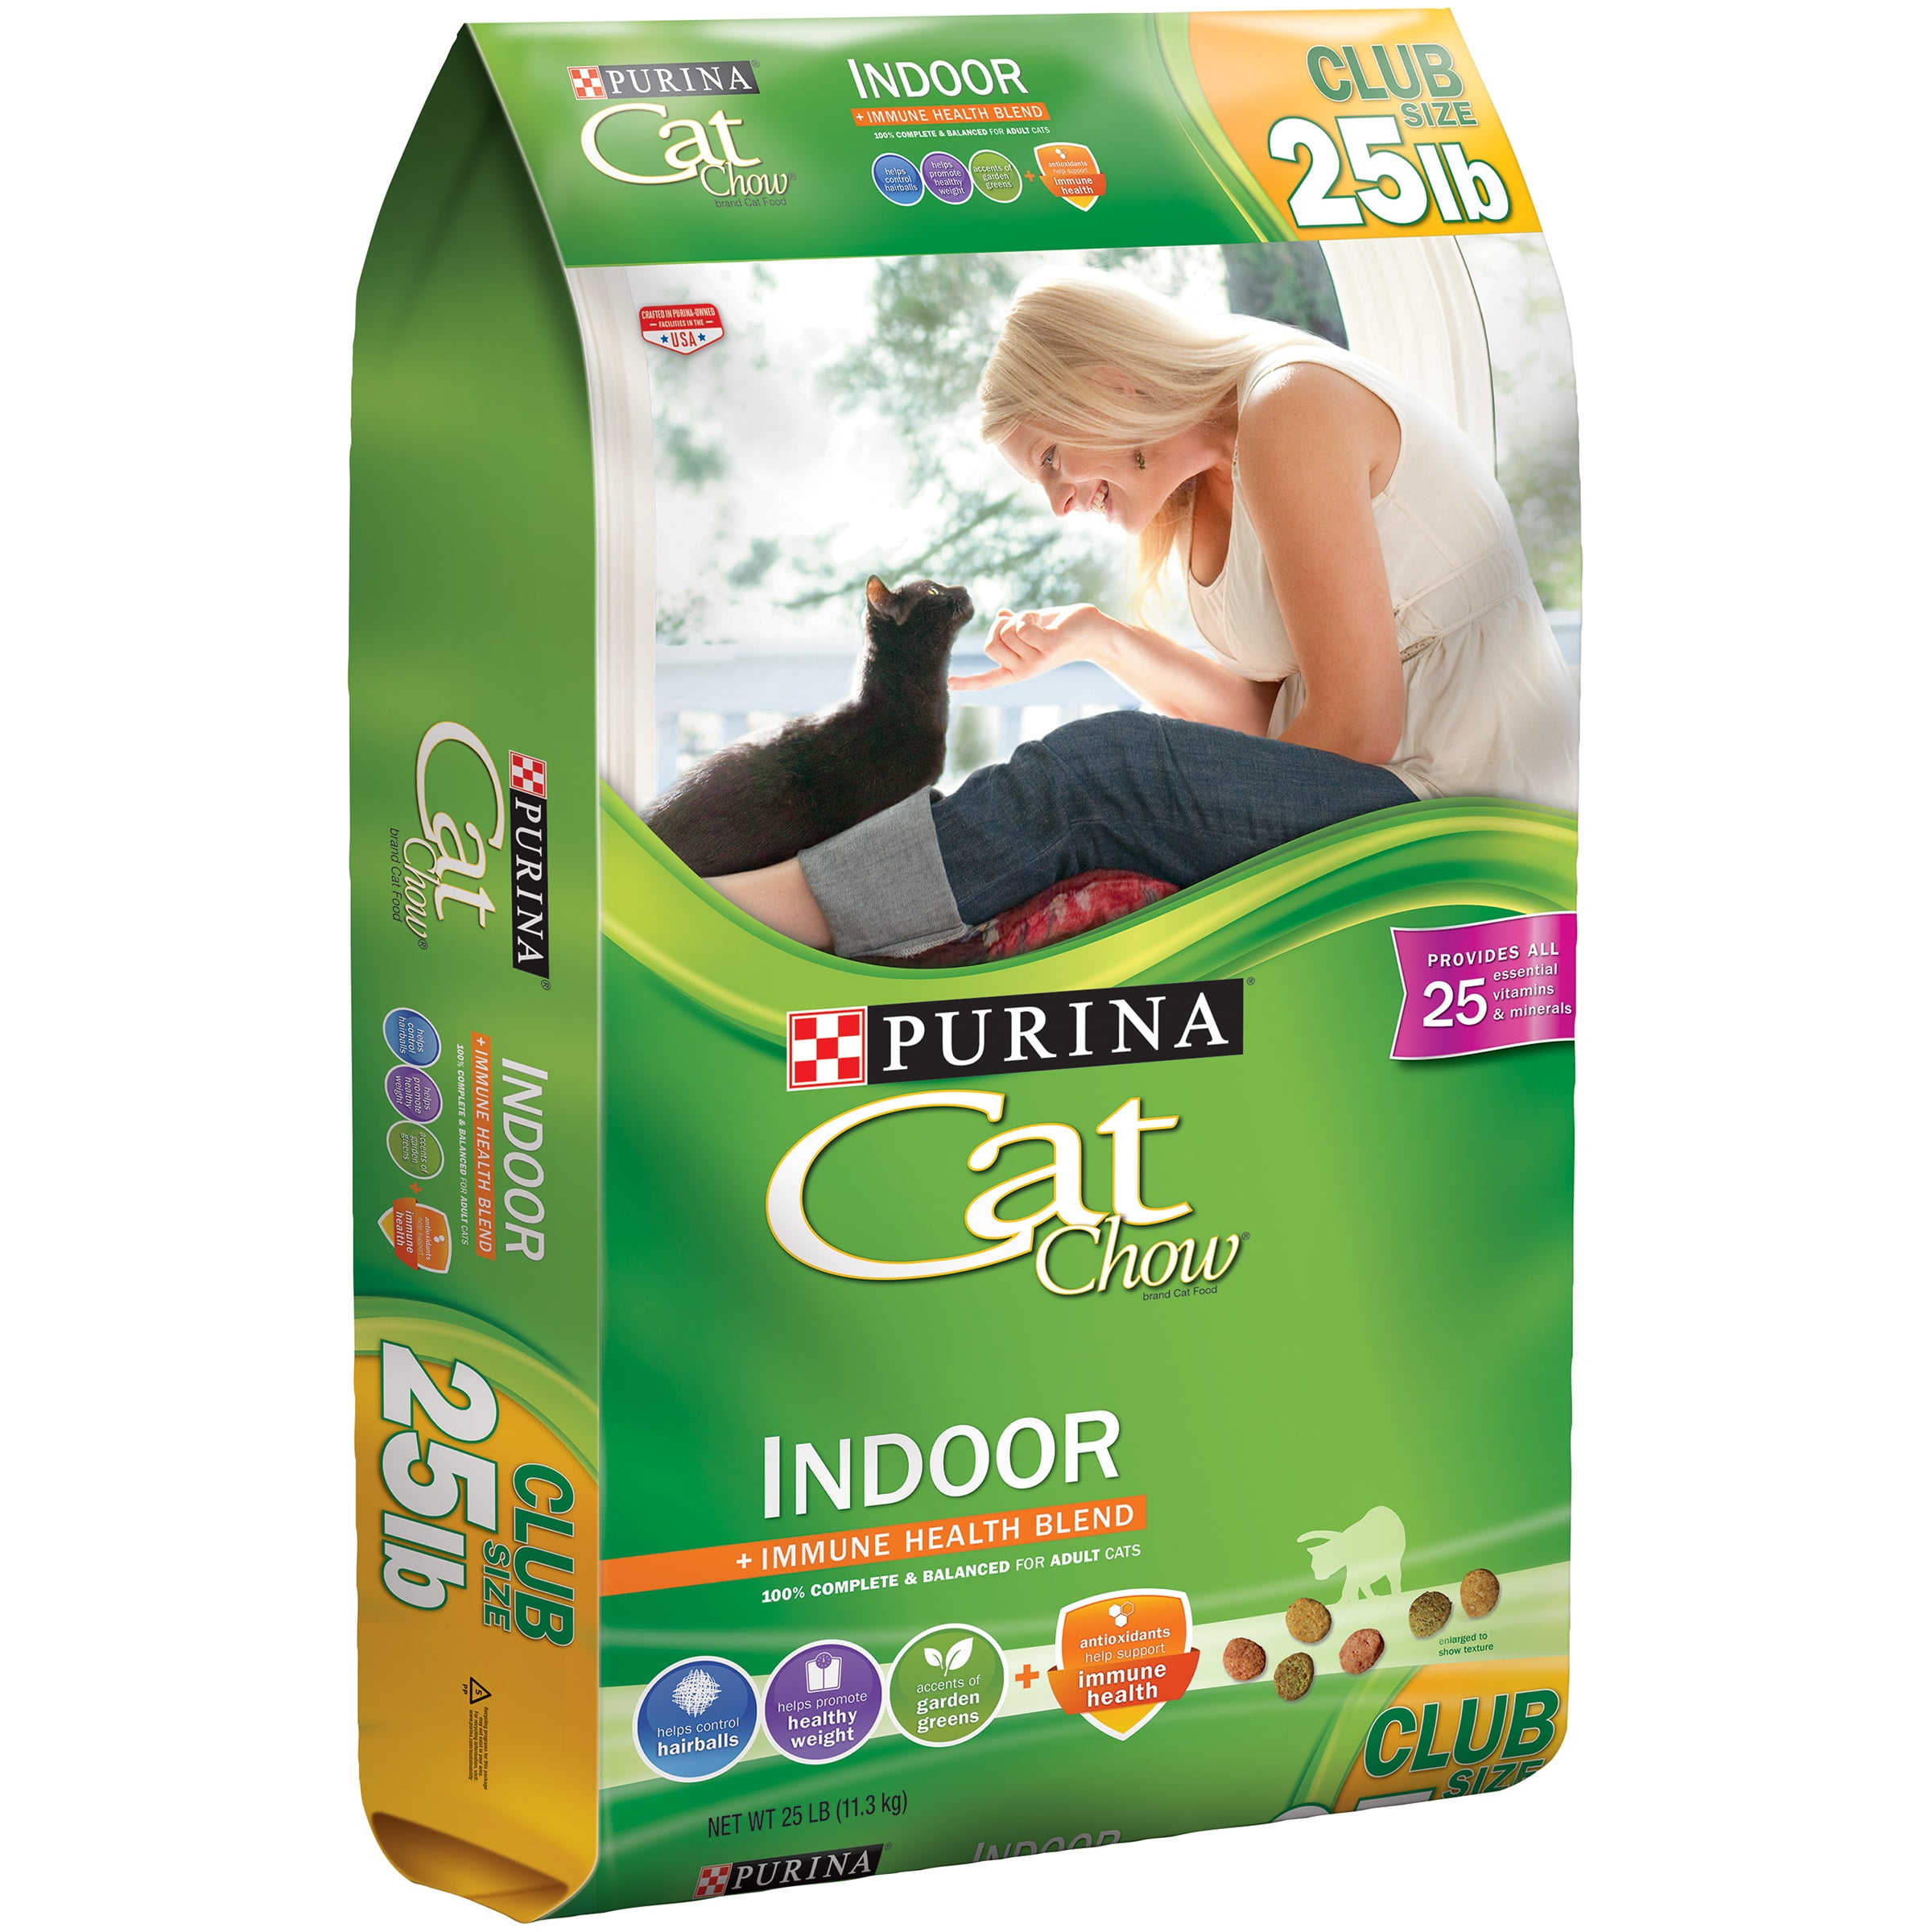 Purina Cat Chow Indoor Dry Cat Food, 25 lb 